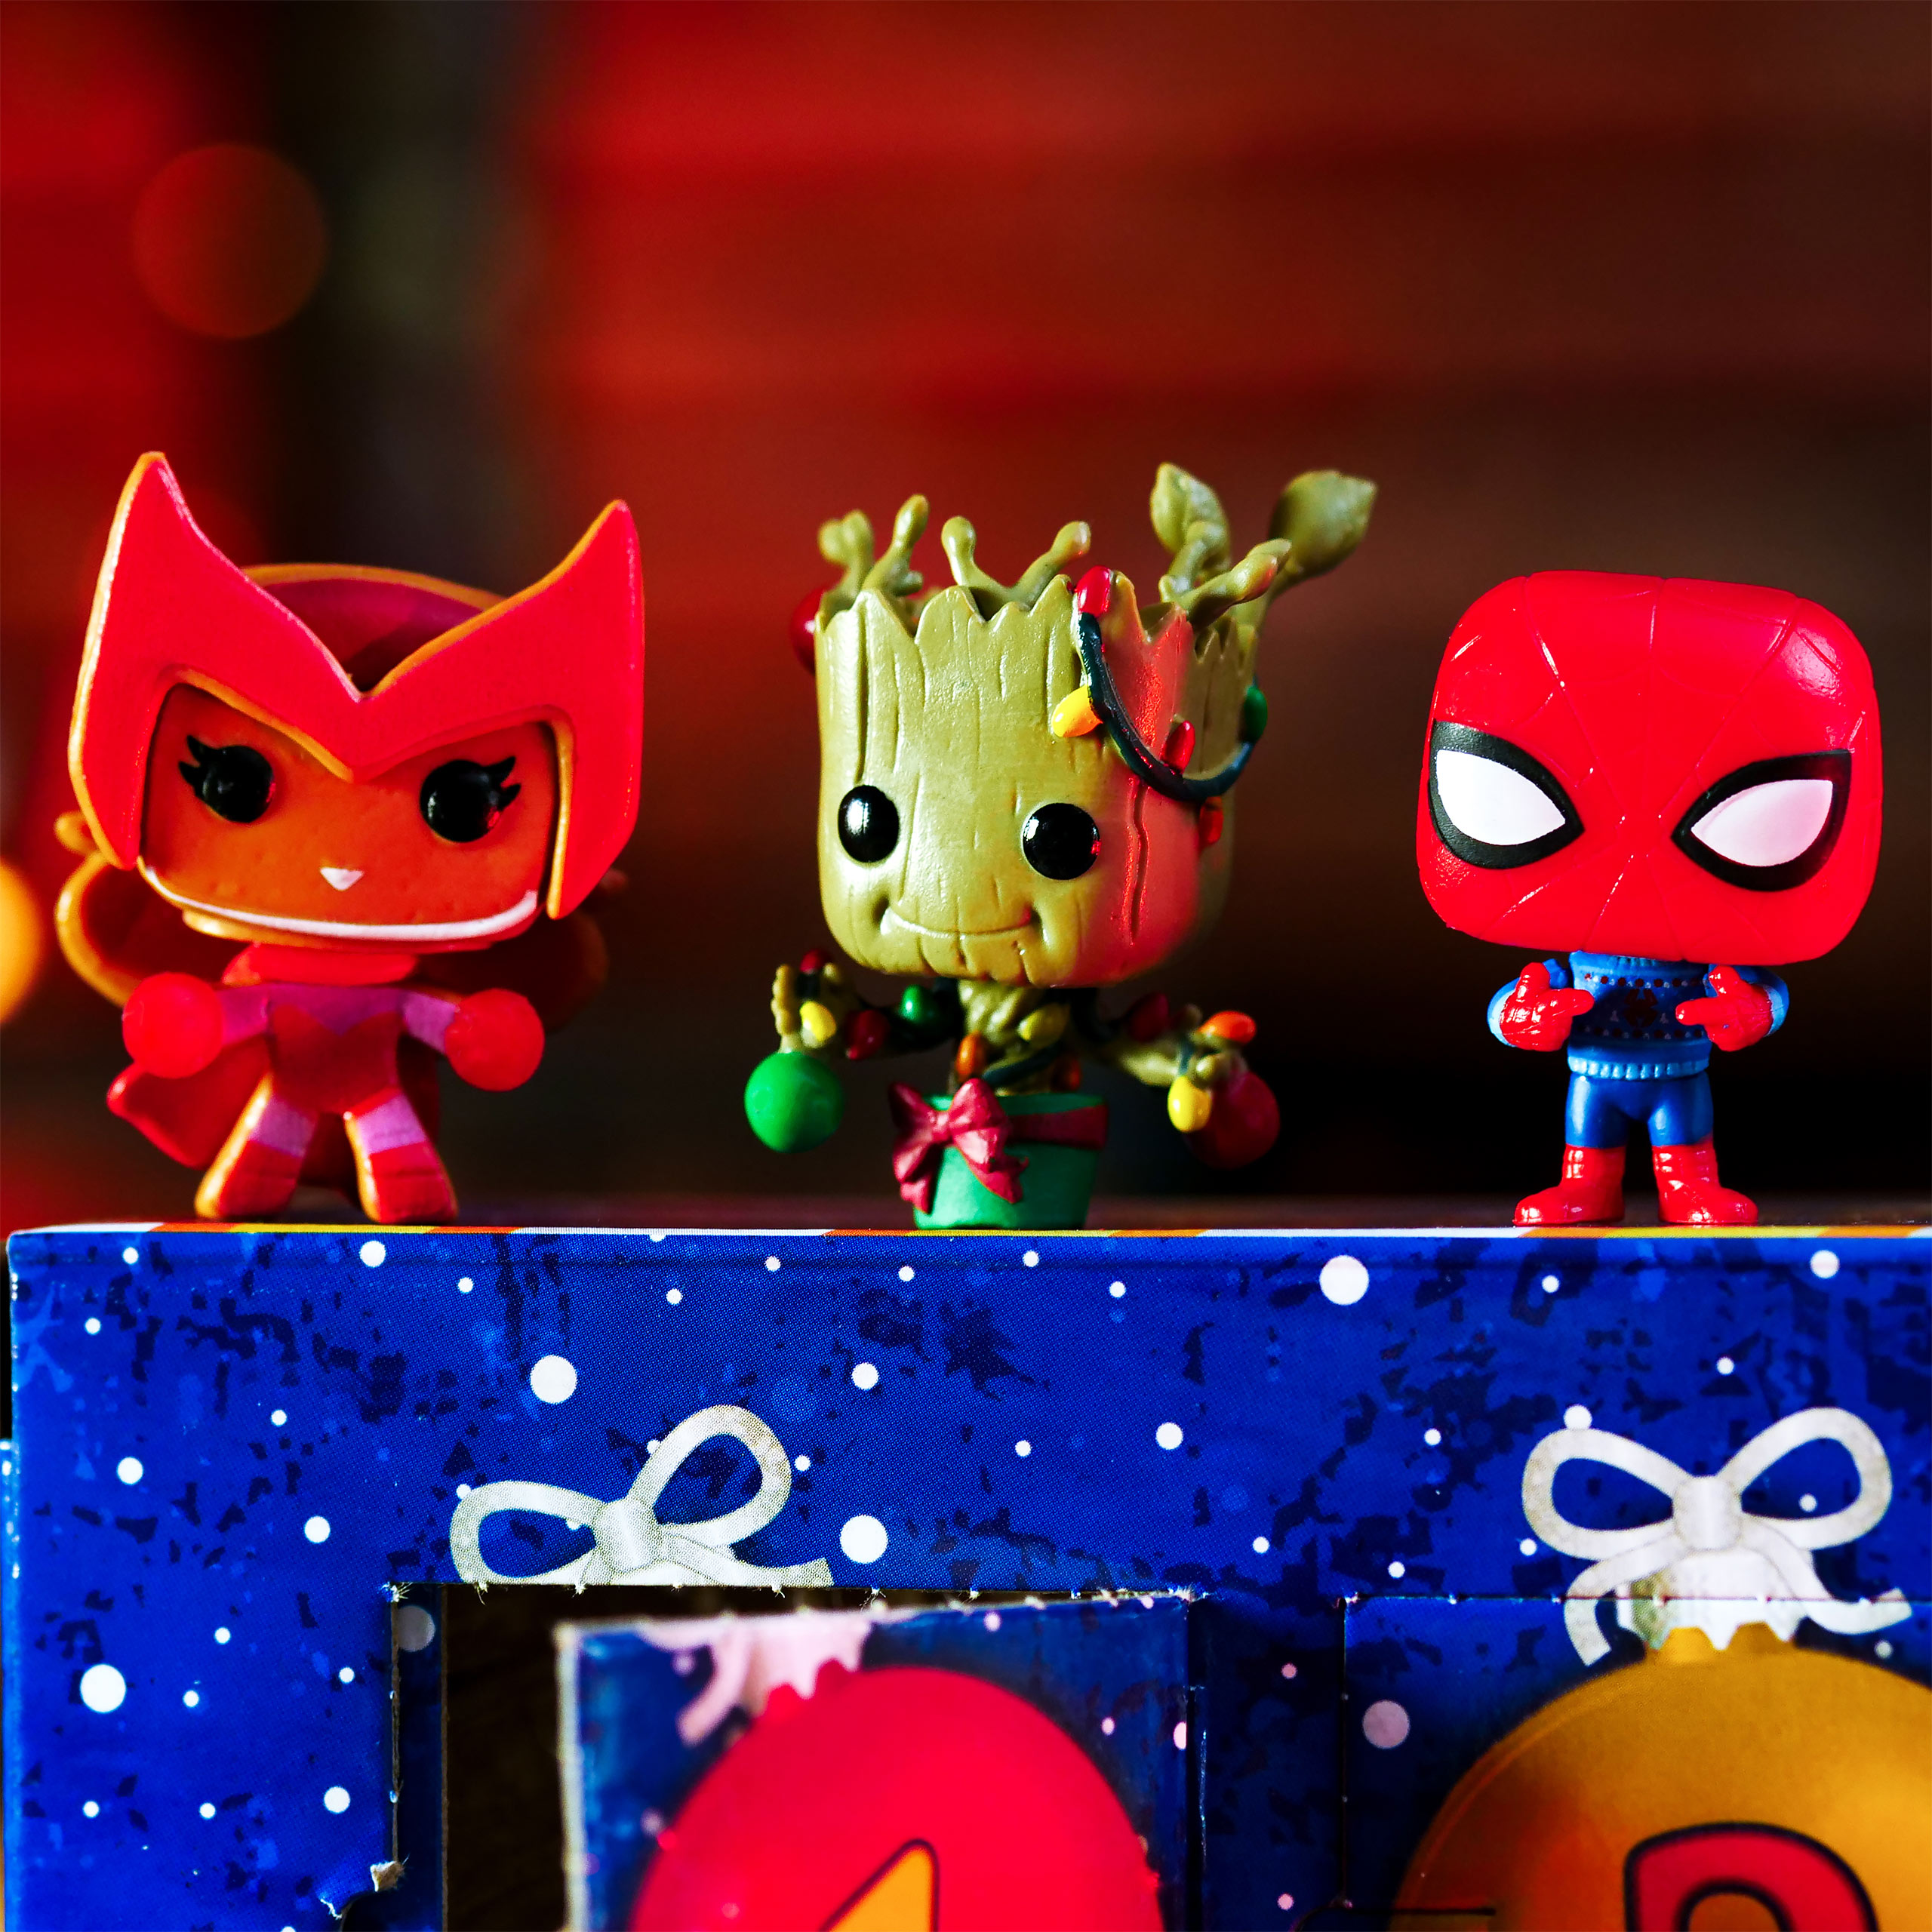 Marvel - Holiday Funko Pop Adventskalender